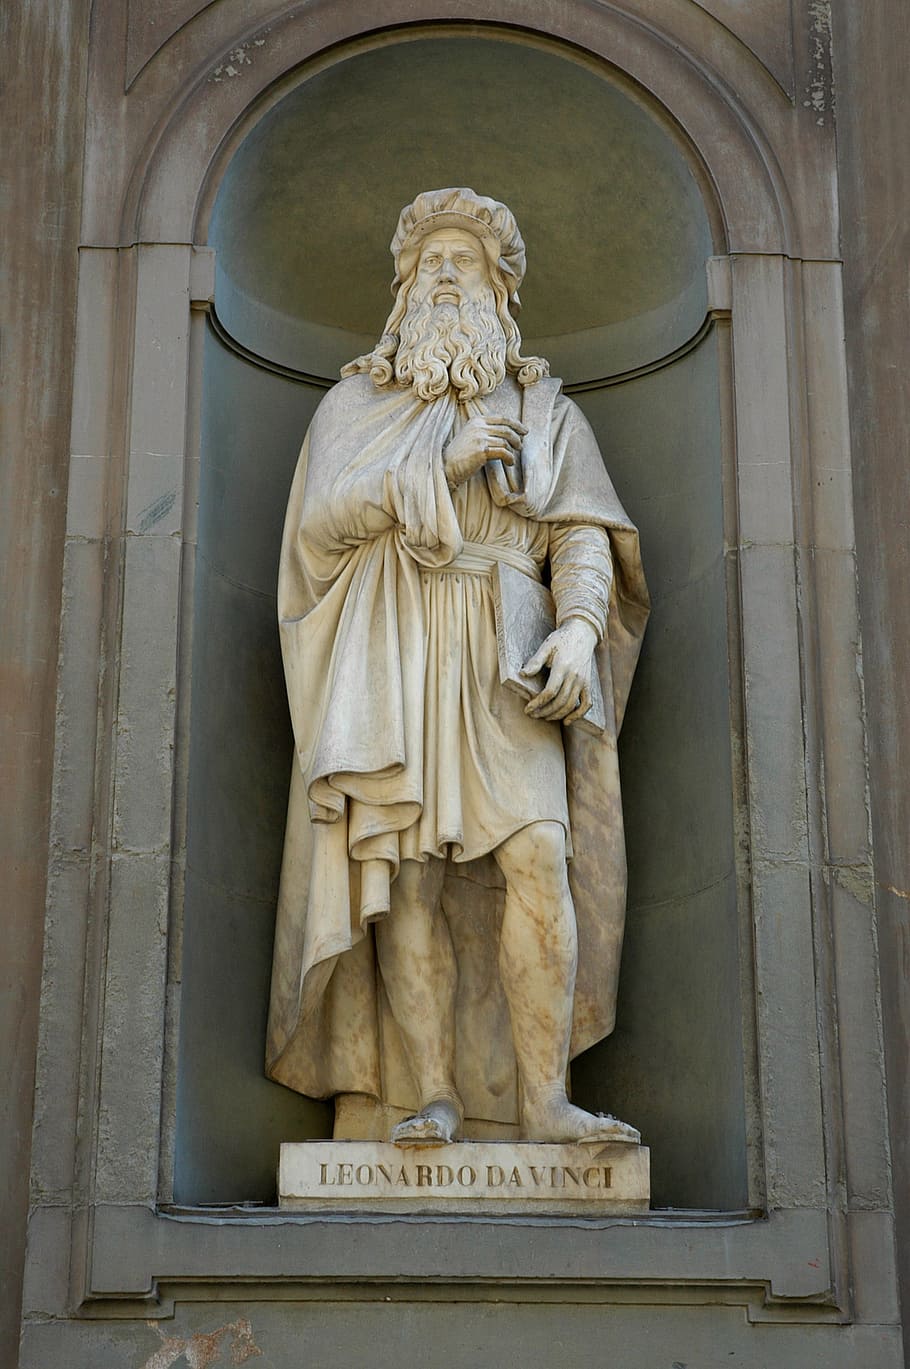 Leonardo Da Vinci, Inventor, intelligence, art and craft, sculpture